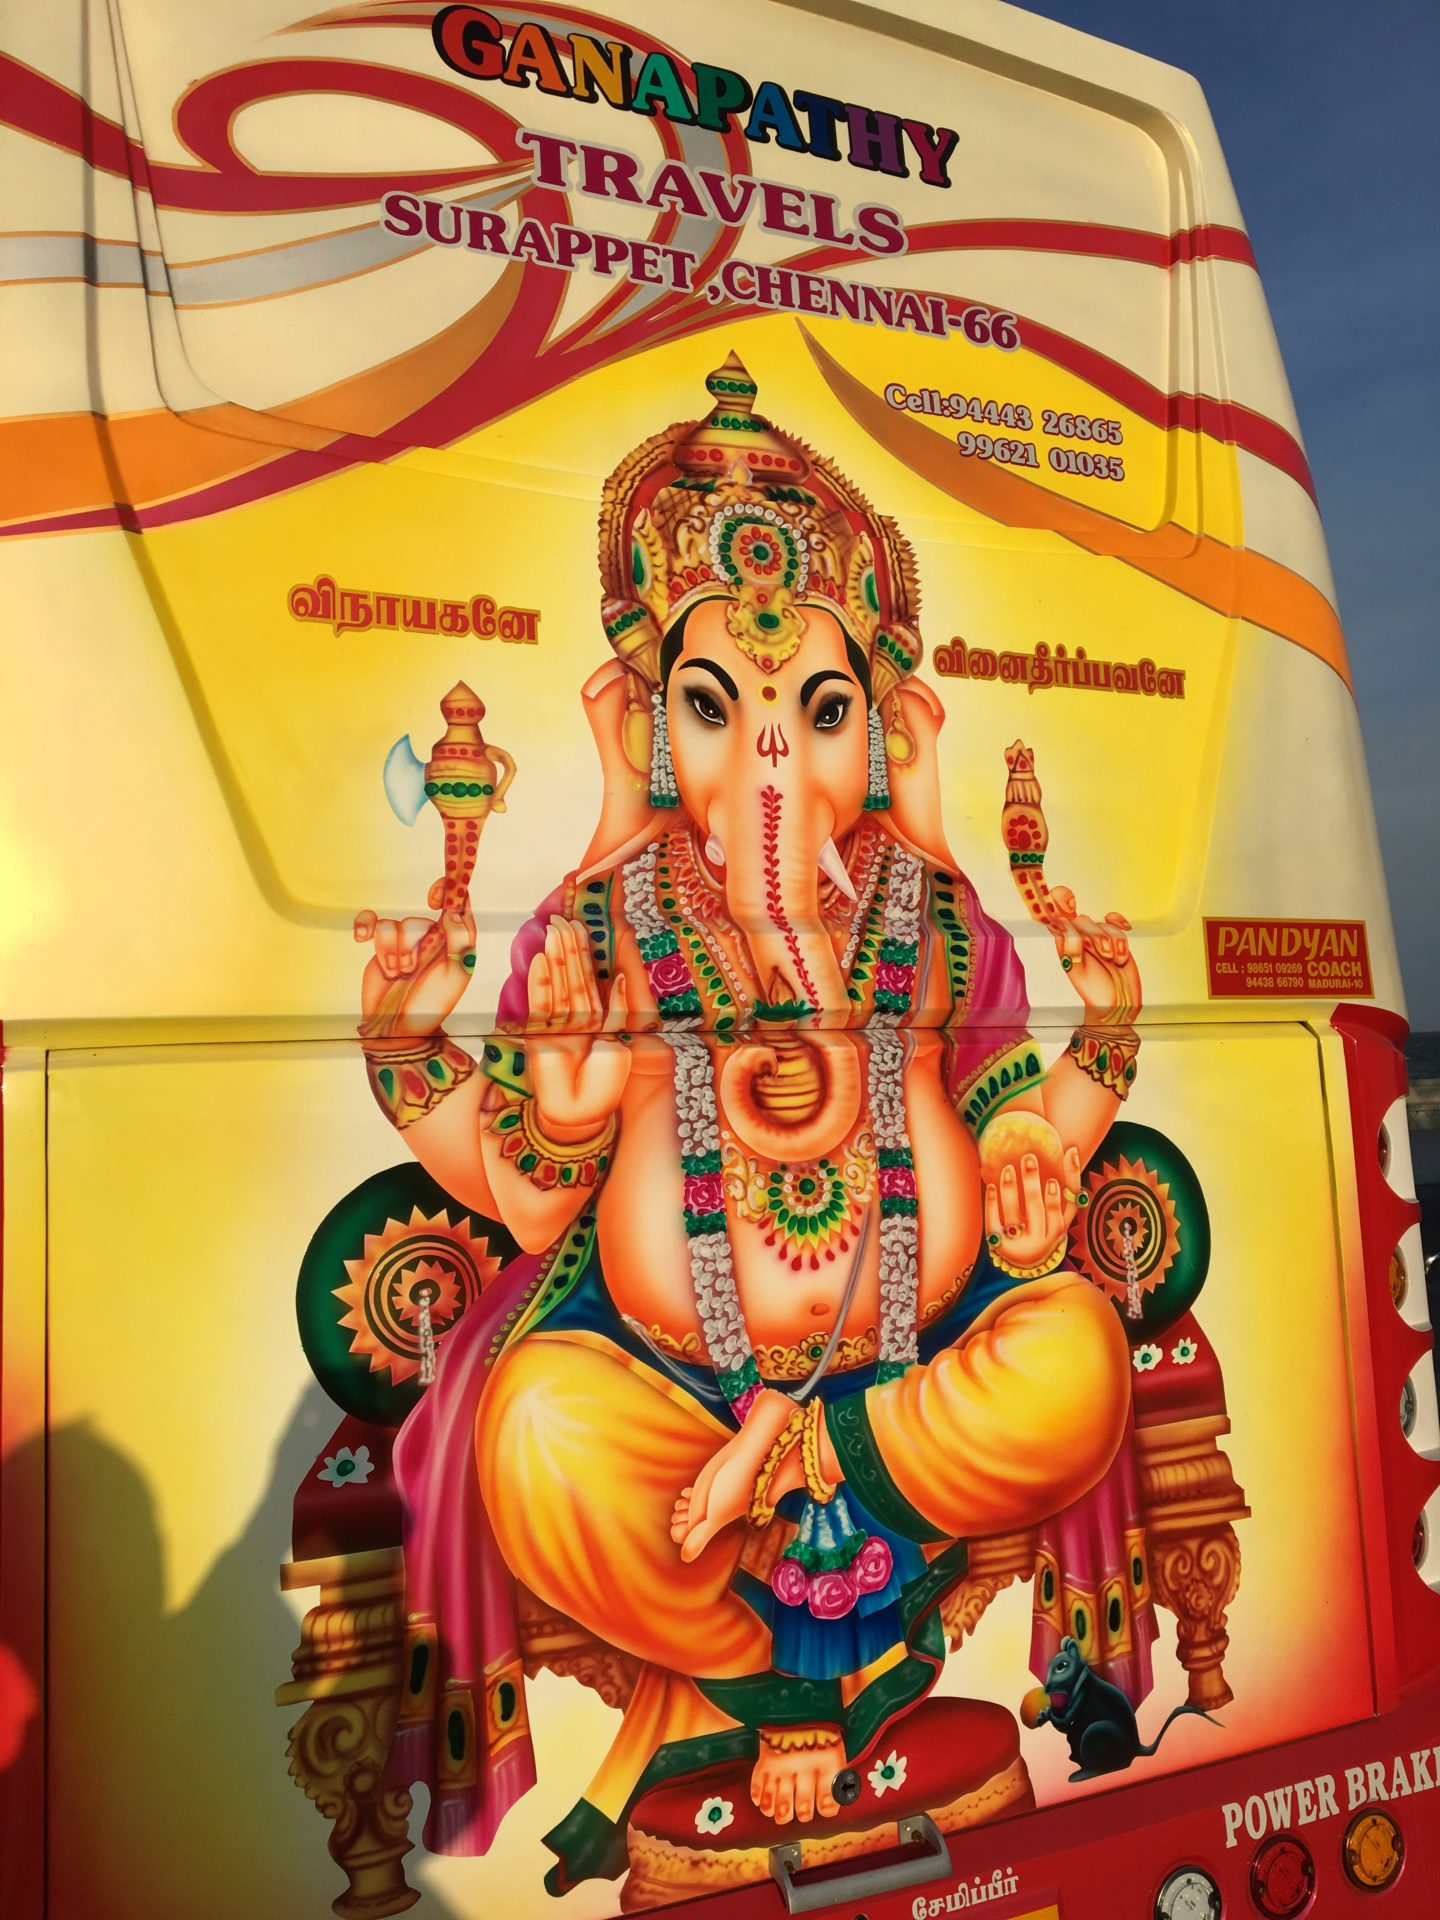 Shantaram and India: Ganesha